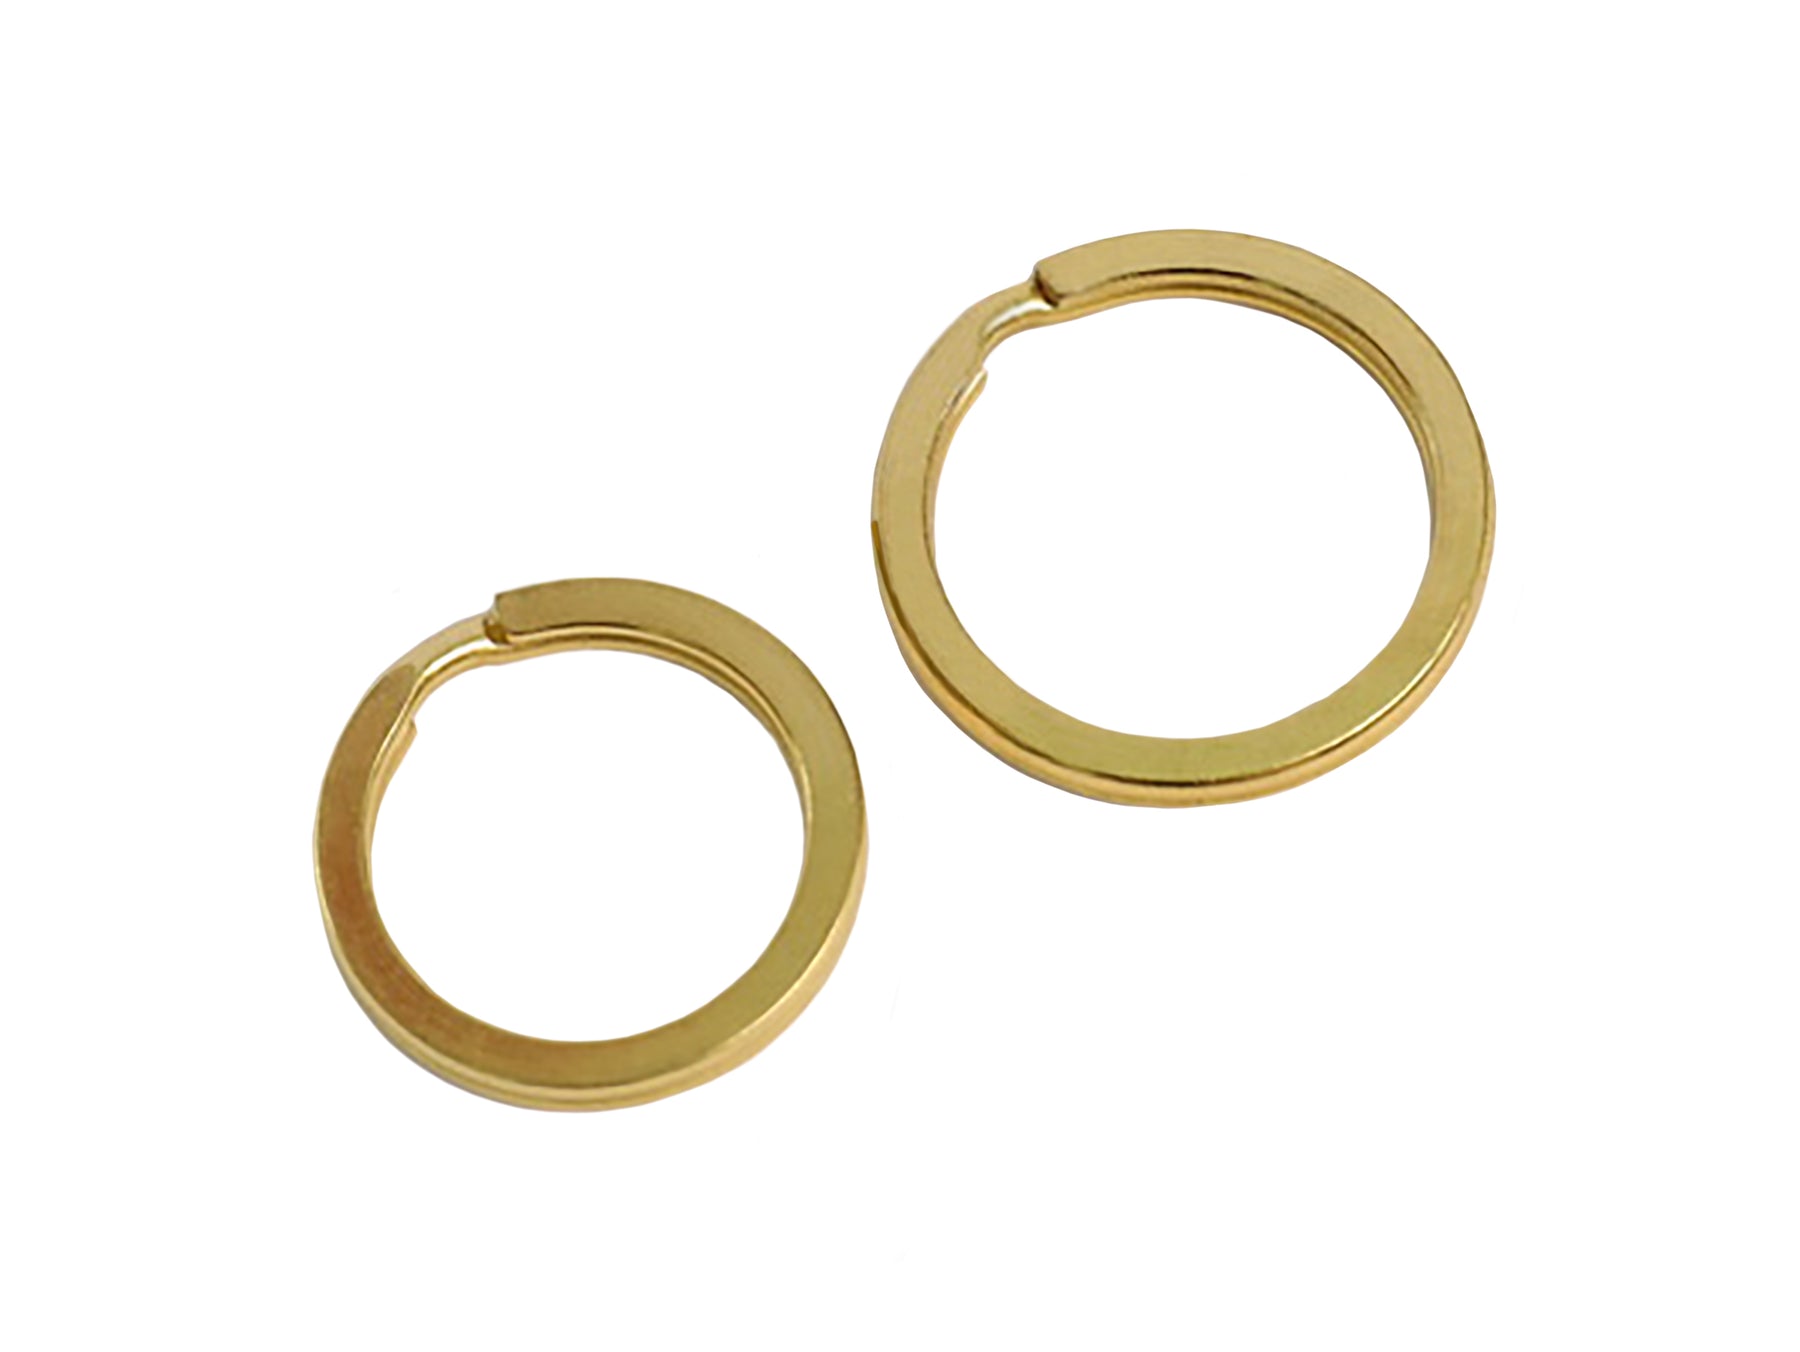 Preimium Solid Brass Split Key Ring Brass Connectors Flat Keyrings